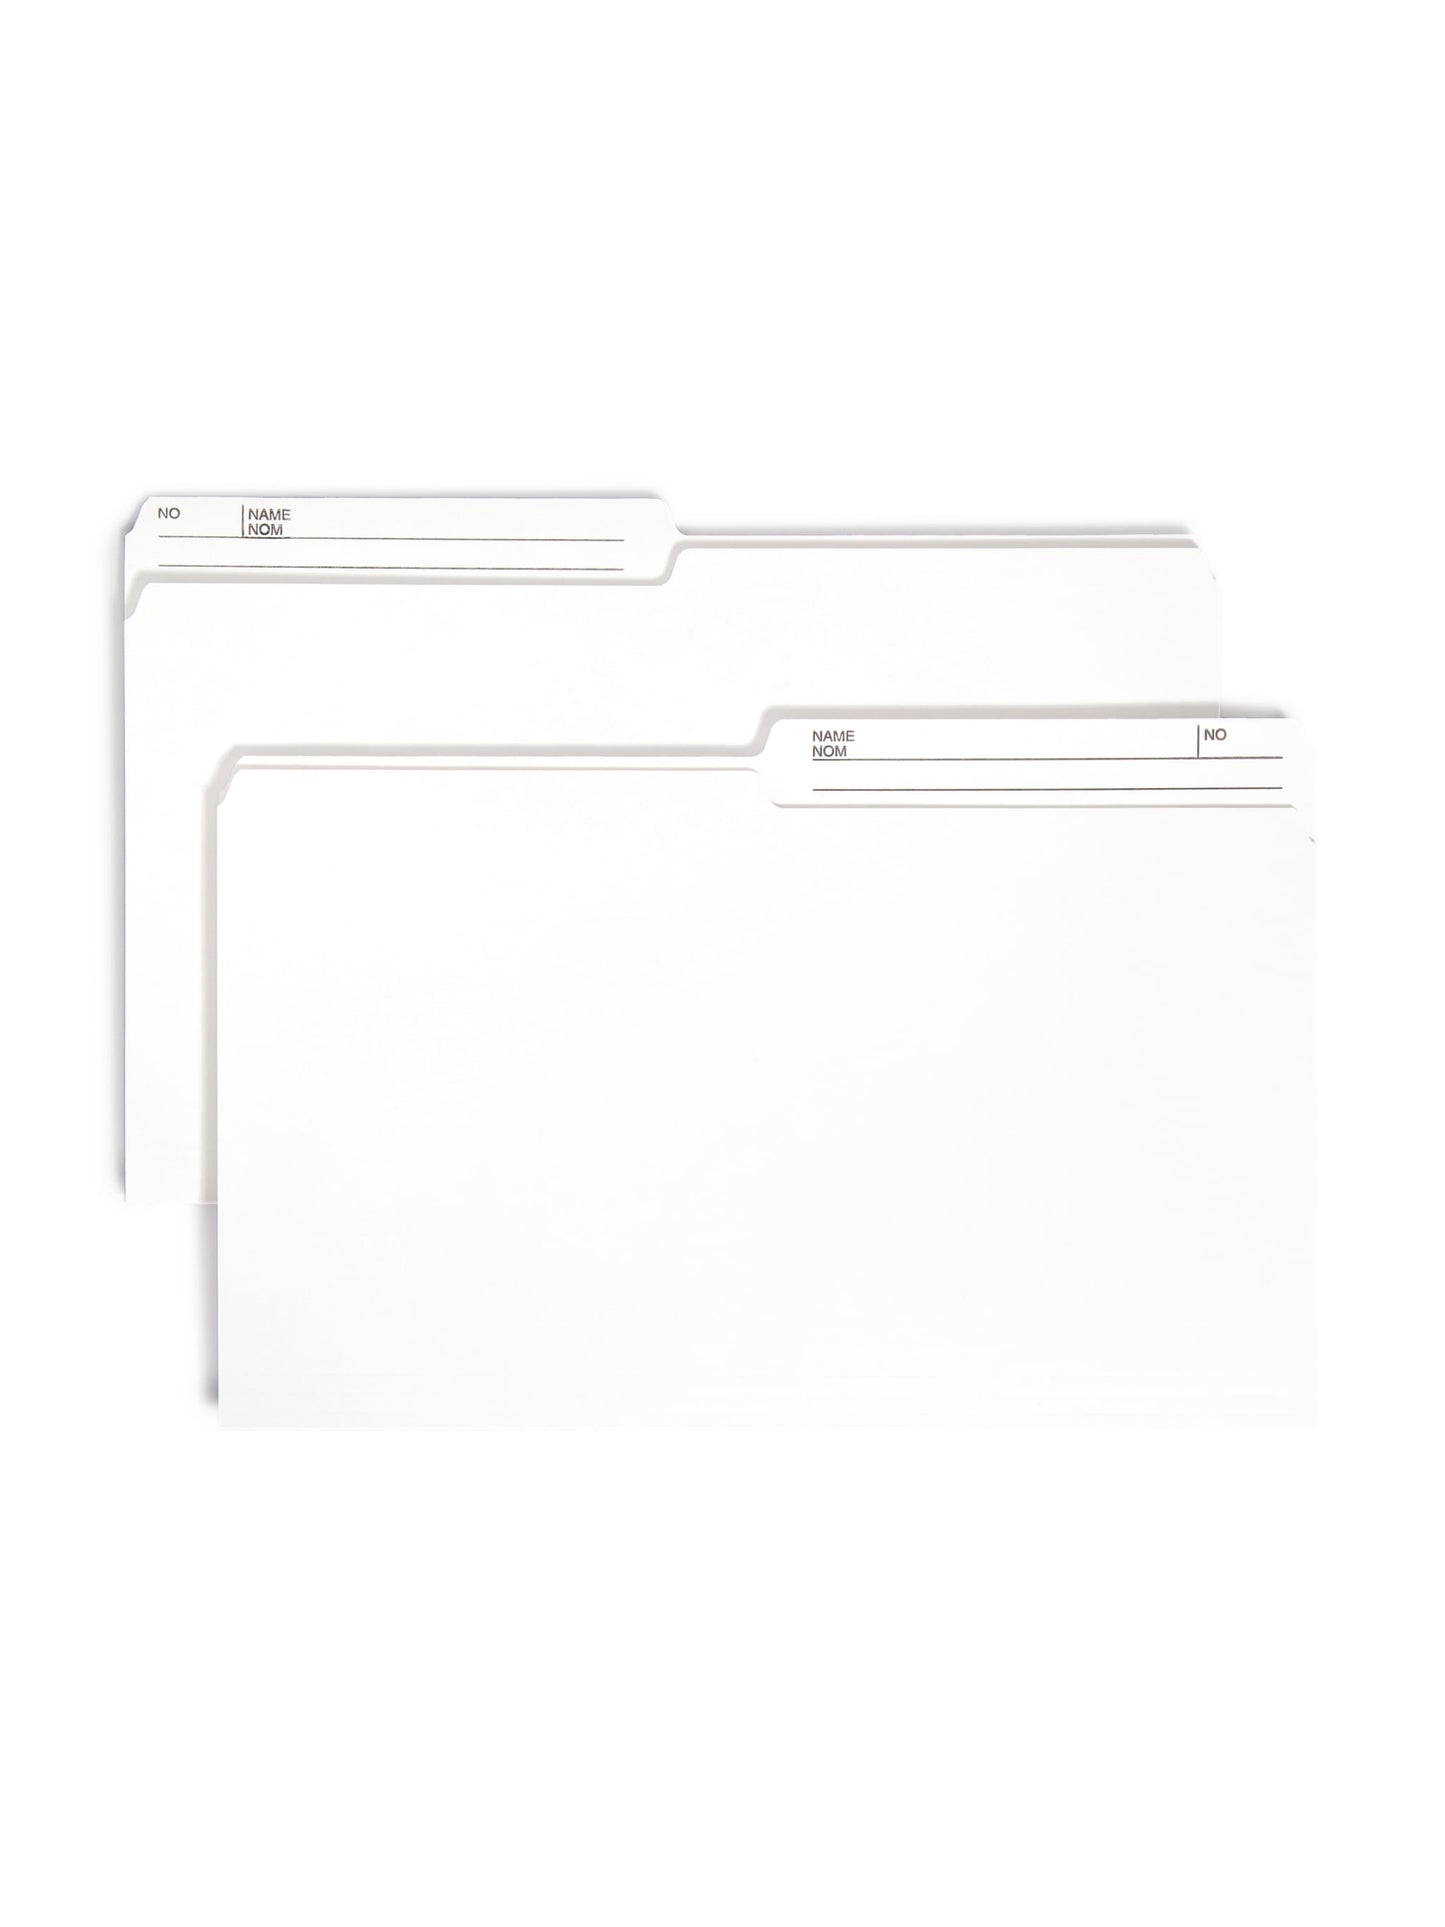 Reversible Printed Tab File Folders, 1/2-Cut Tab, 9 1/2 pt., Ivory Color, Legal Size, Set of 100, 086486151467